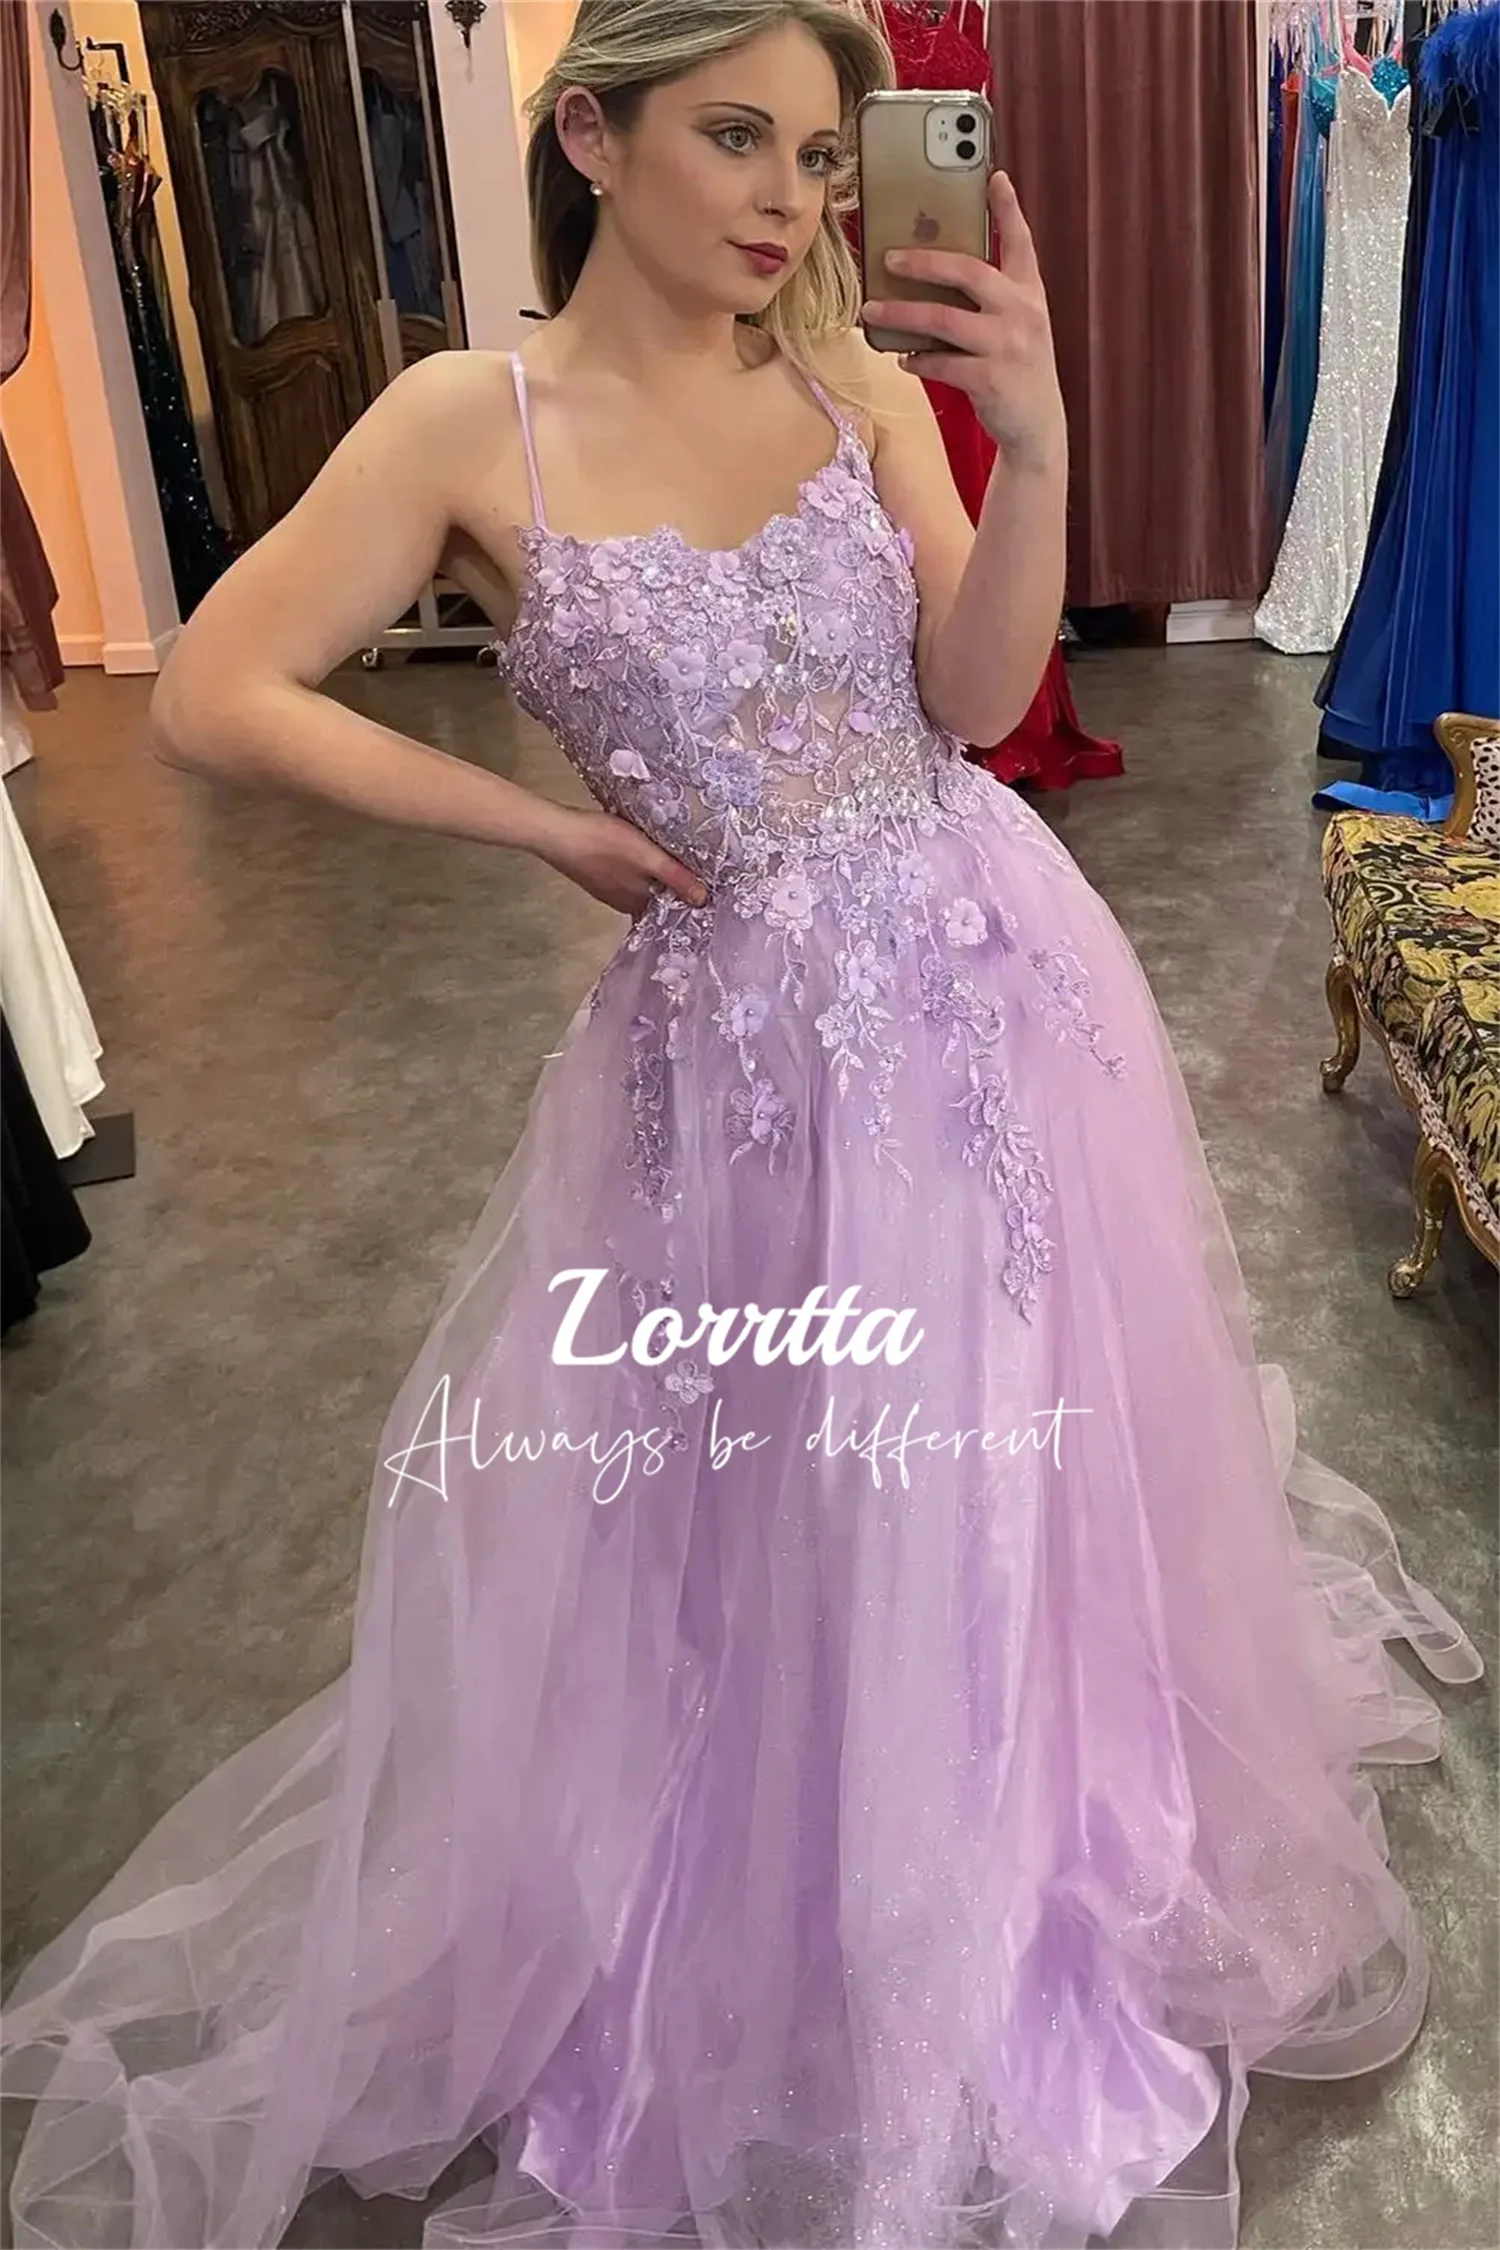 

Lorrtta Applique Tulle Lilac A-Line Spaghetti Straps Birthday Party Dress Women's Evening Prom Elegant Gala Formal Dresses Long